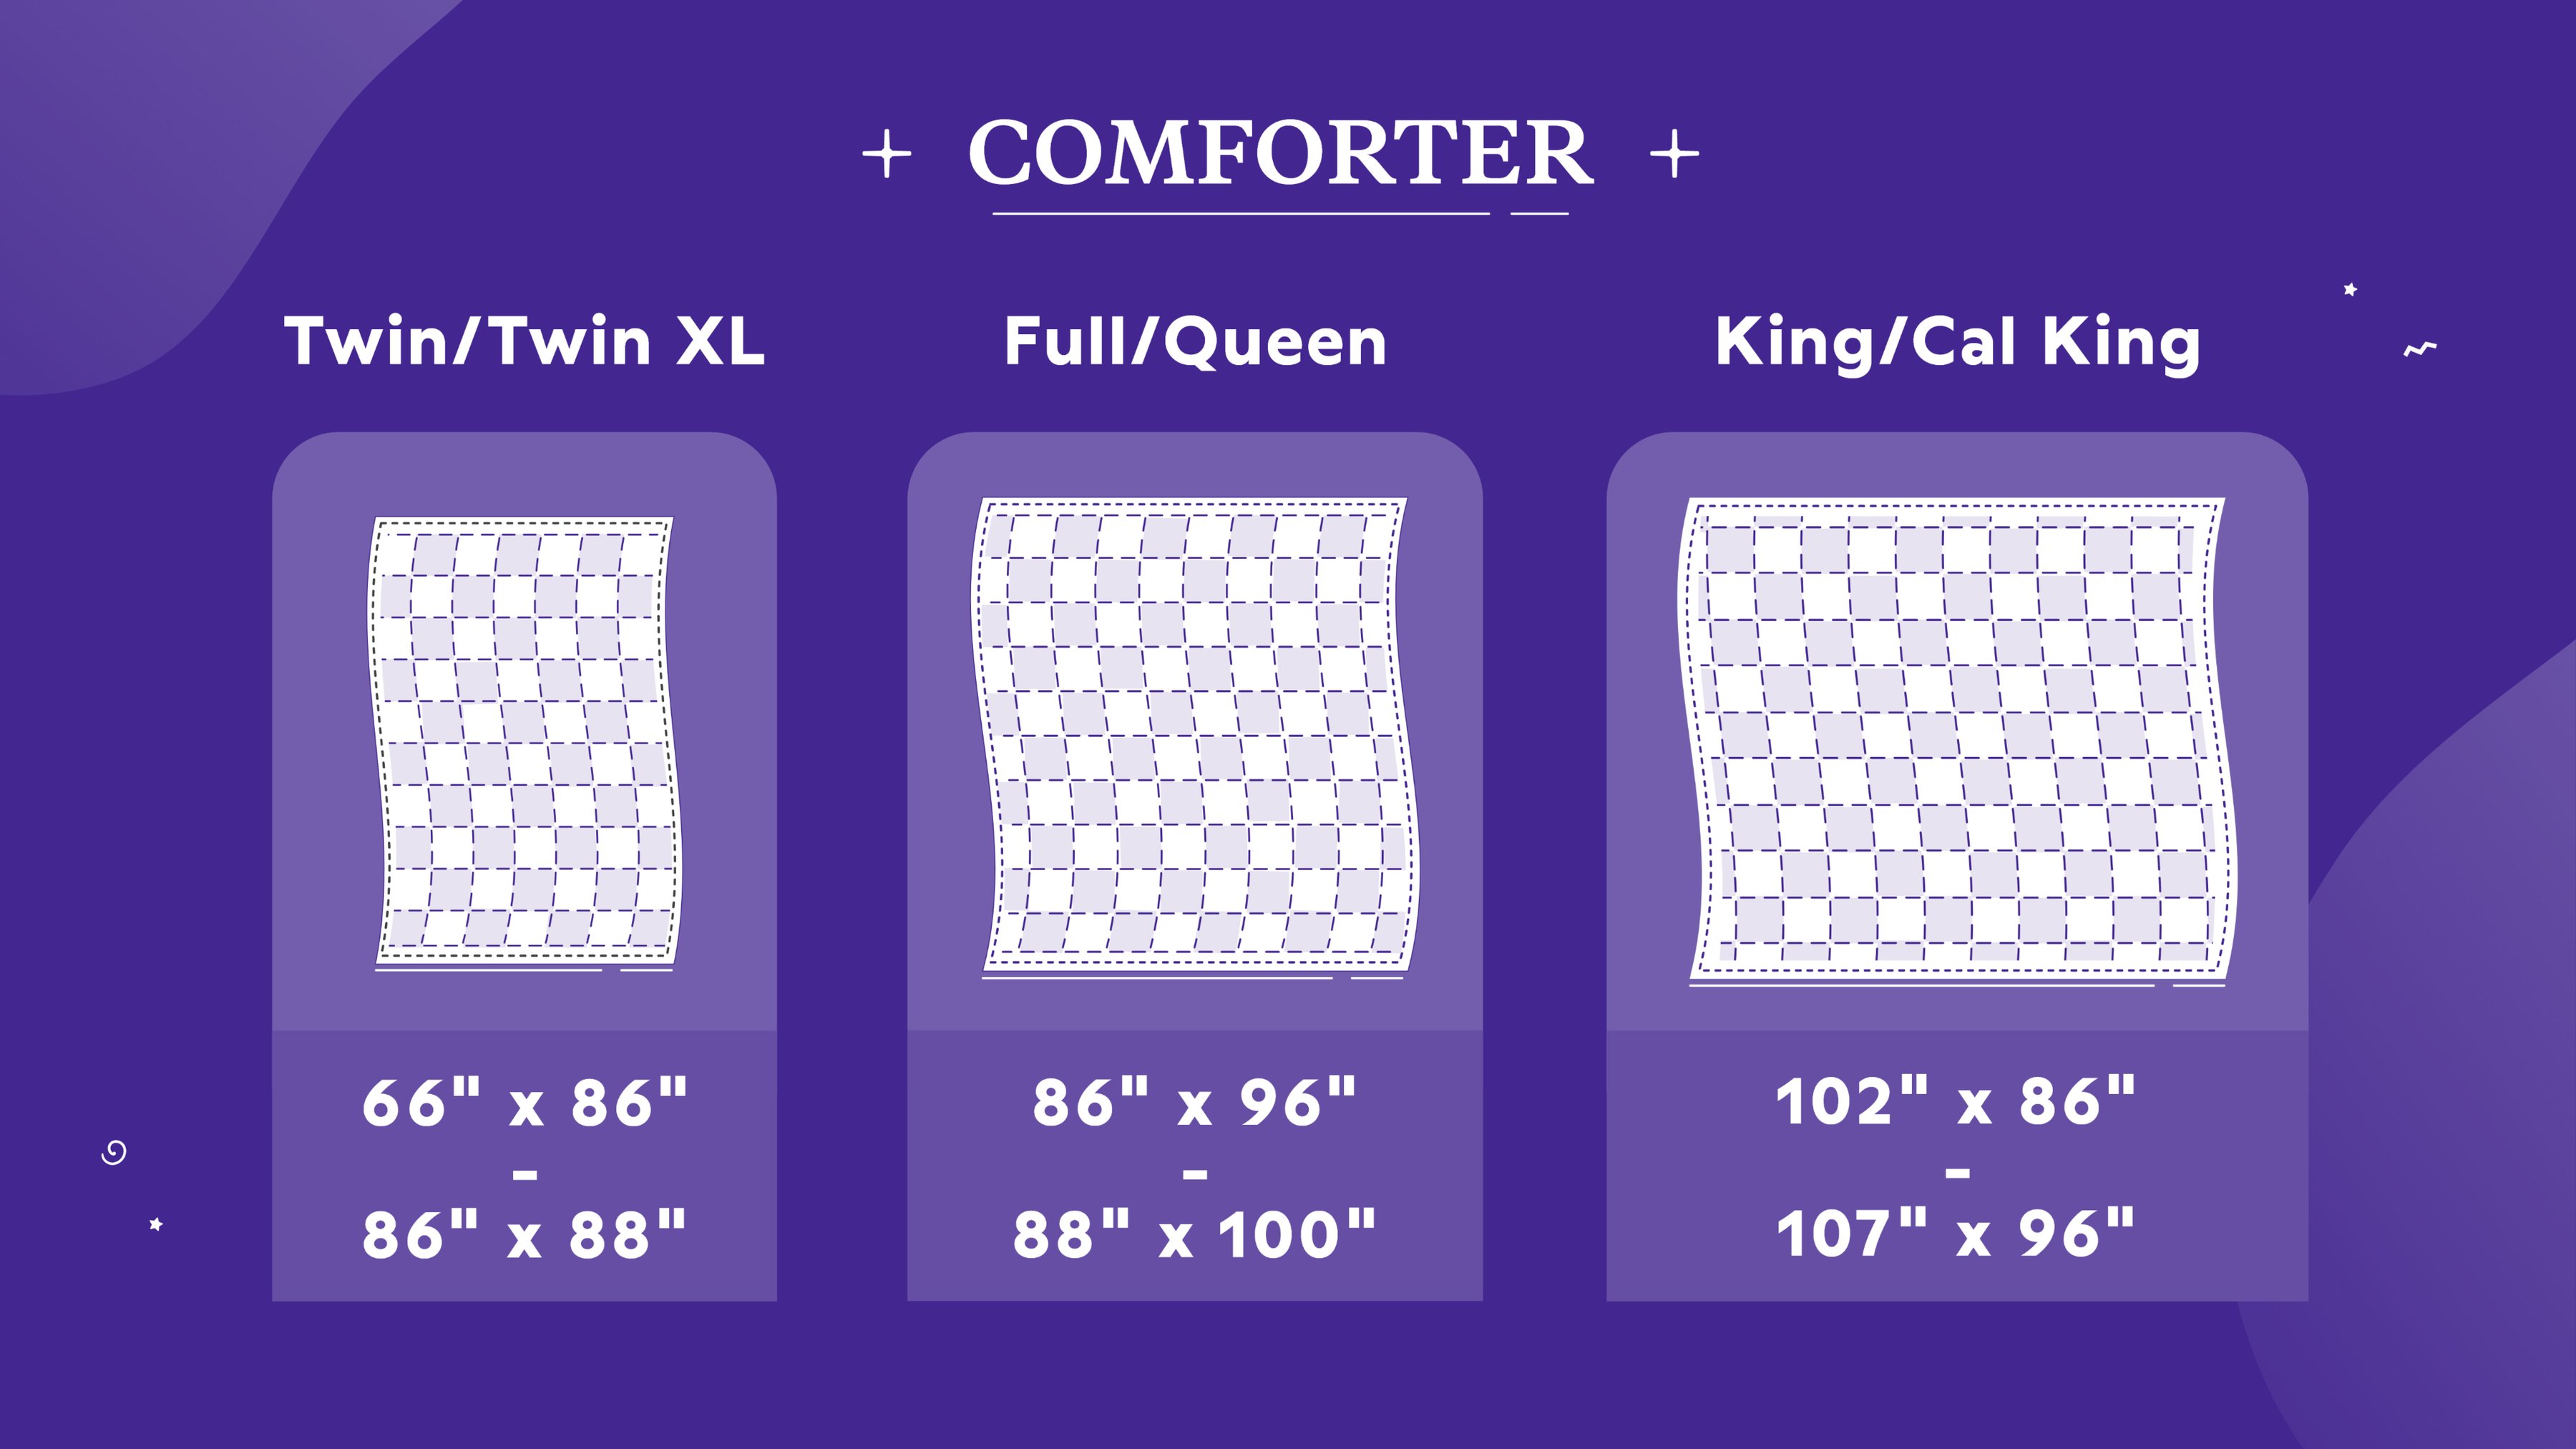 comforter dimensions